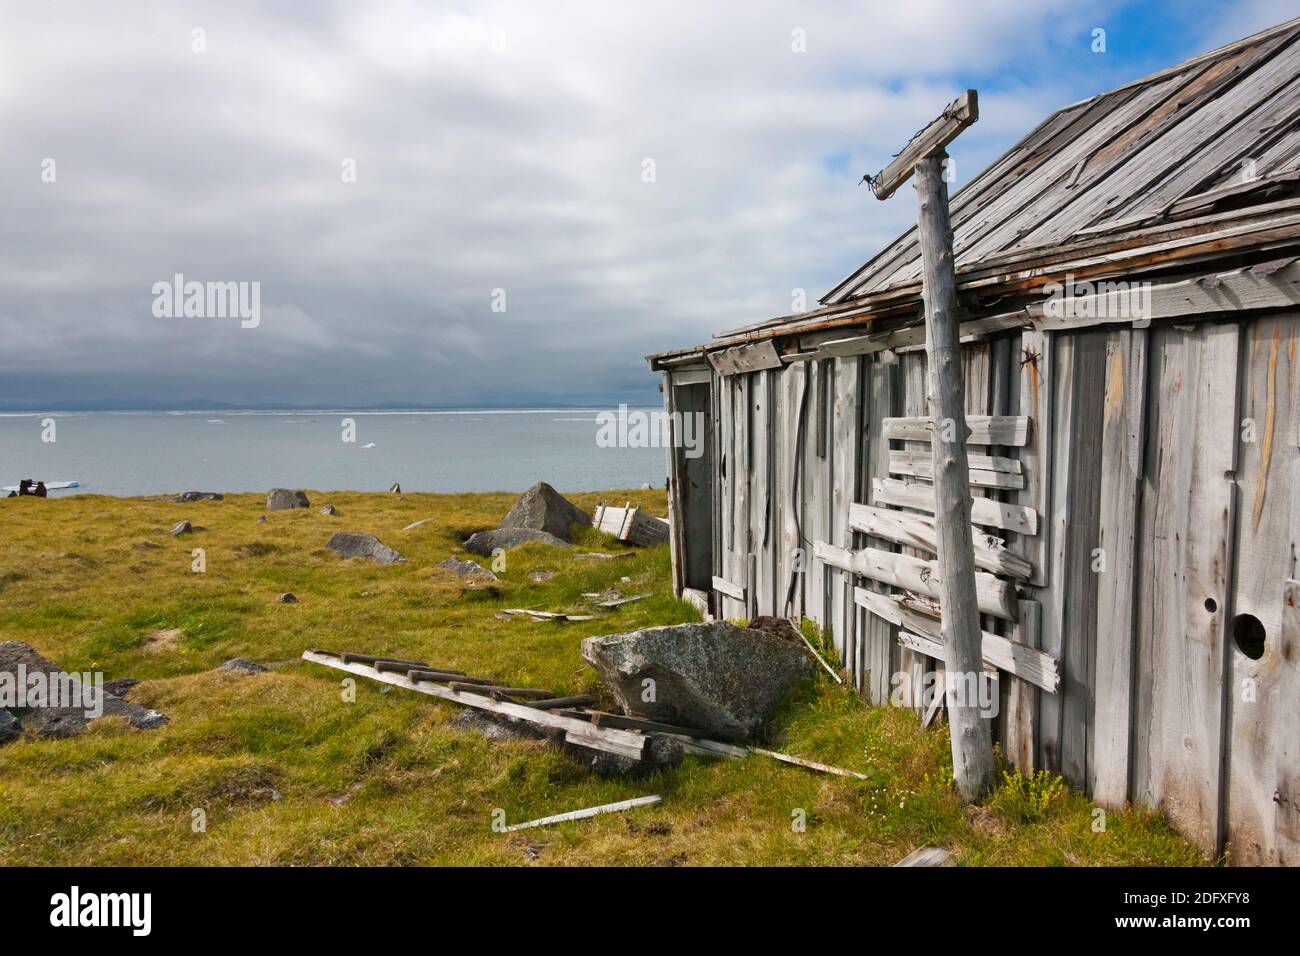 Abandoned house, Kolyuchin Island, once an important Russian Polar Research Station, Bering Sea, Russian Far East Stock Photo